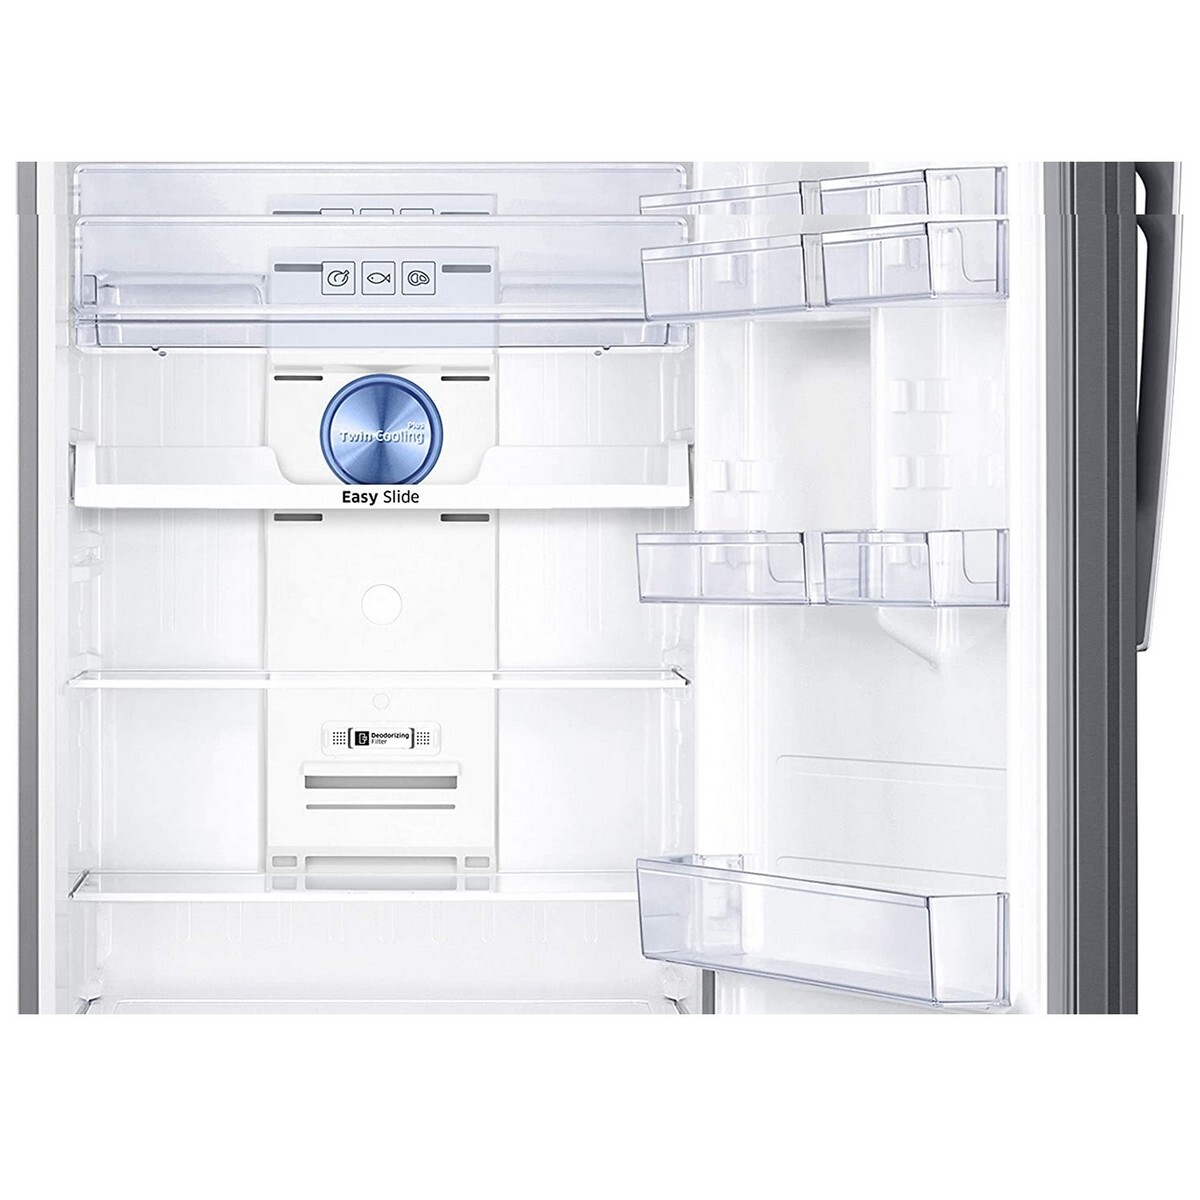 Samsung Refrigerator RT49R633ESL 478L 3 Star